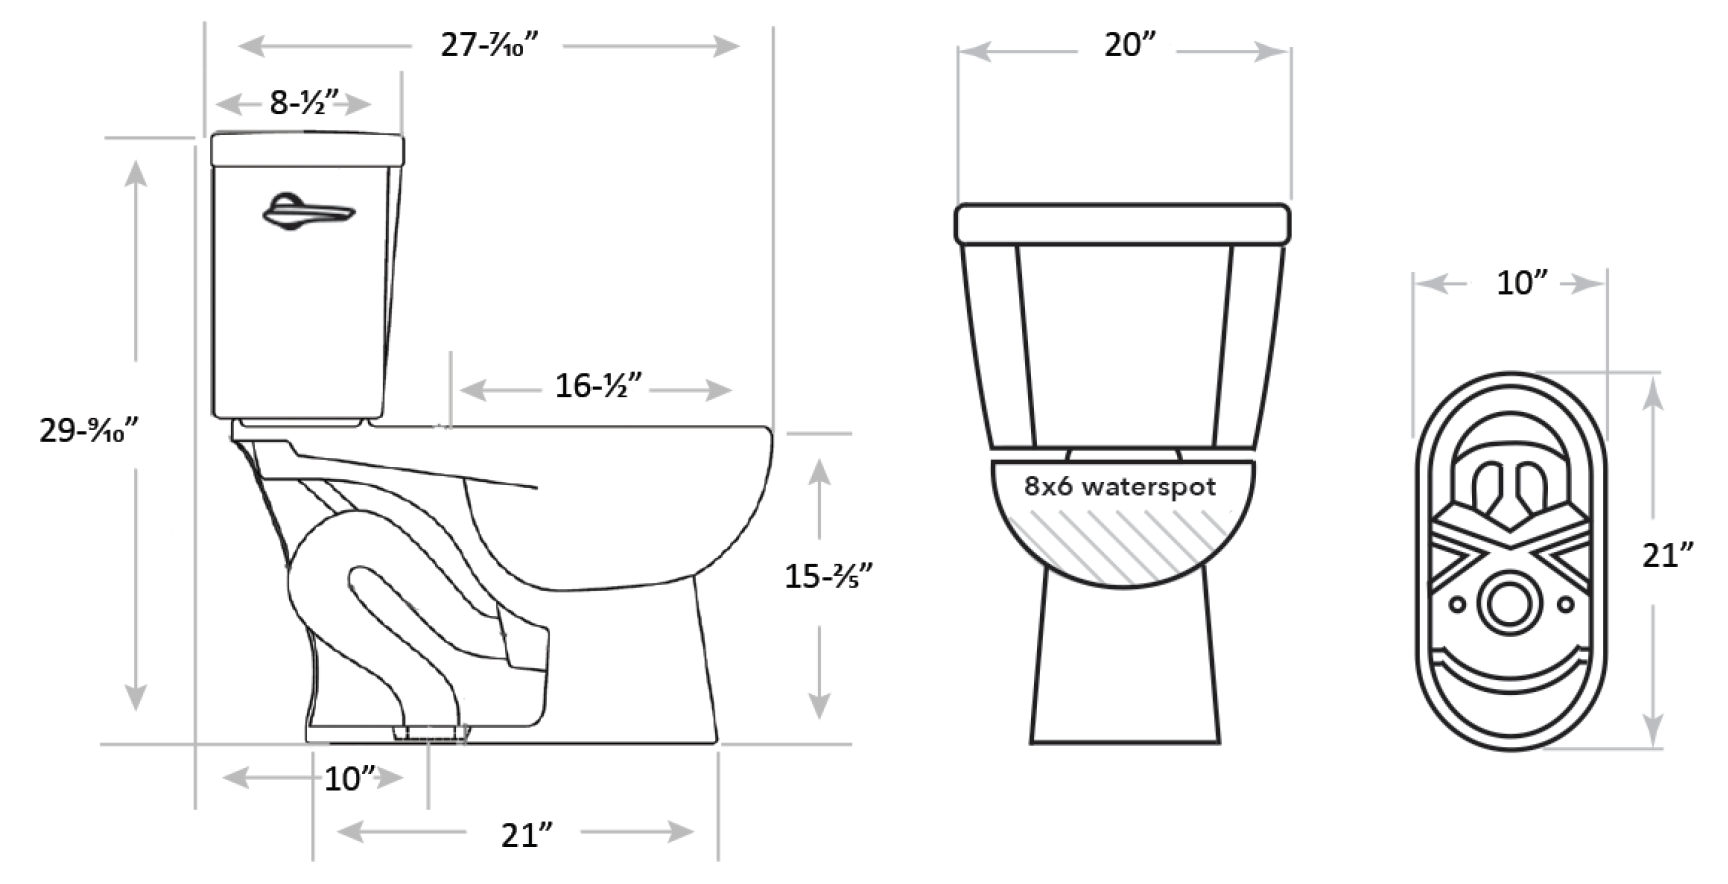 BARRON Round Bowl Toilet technical information